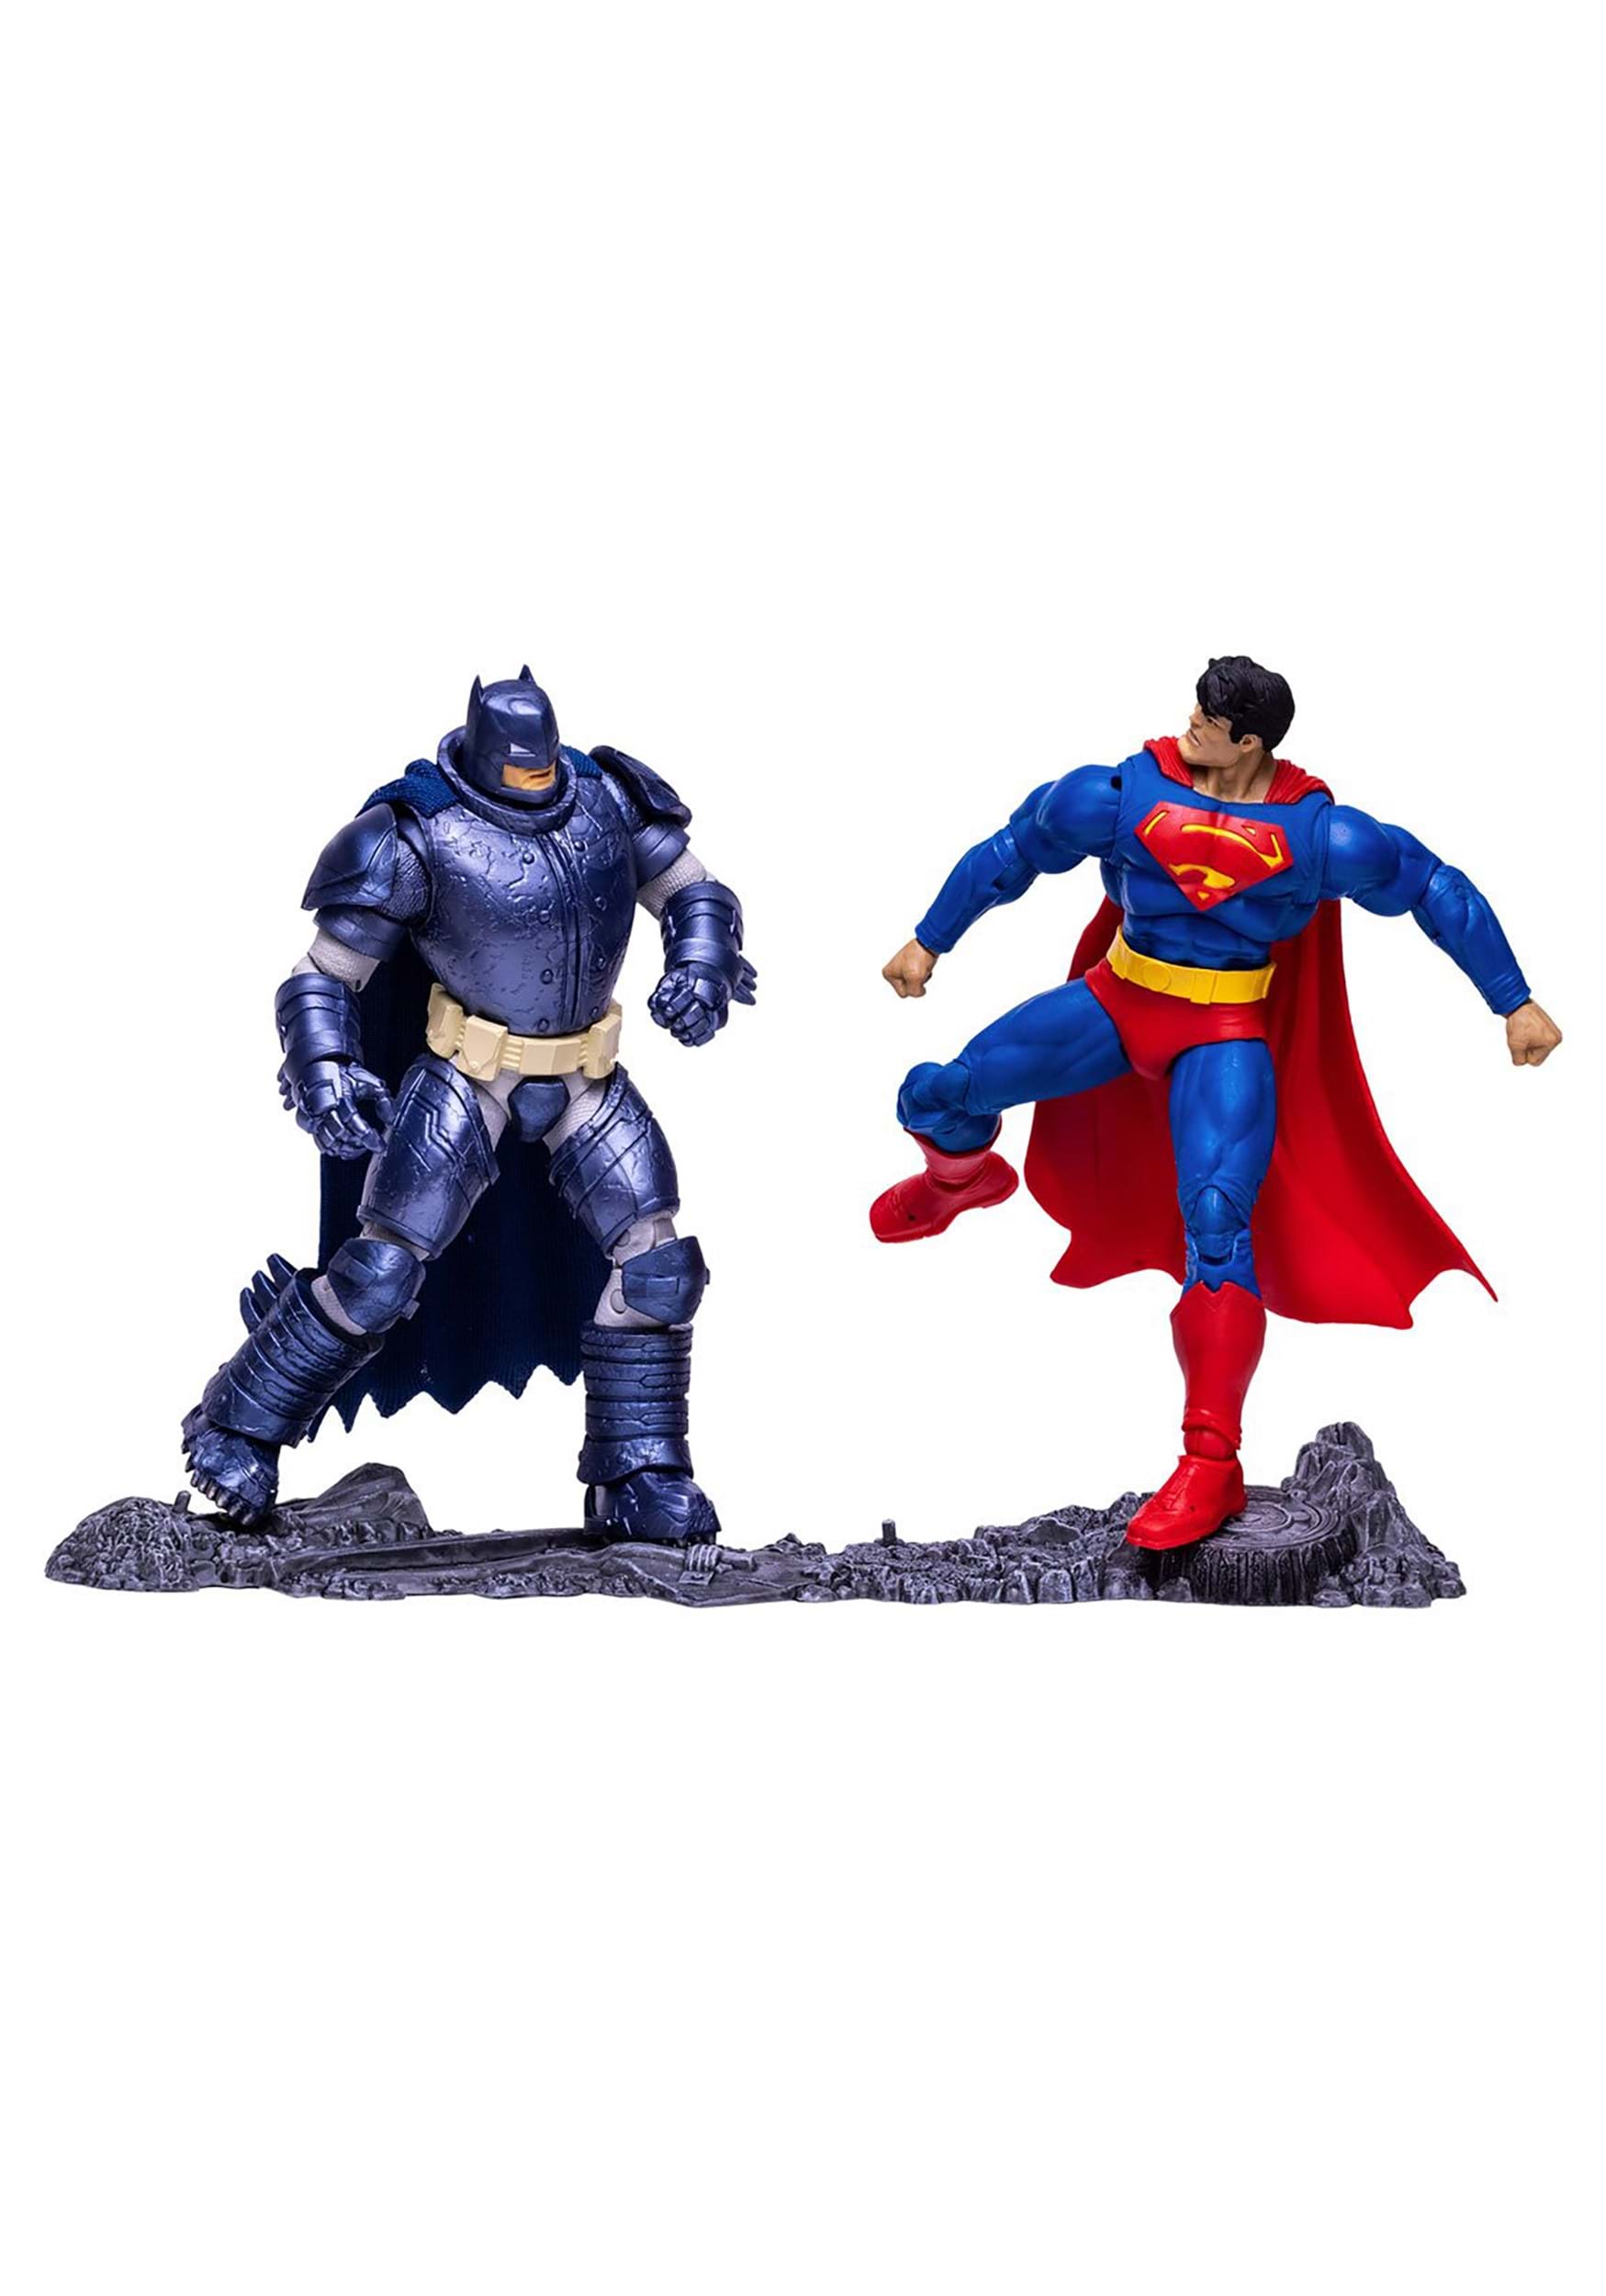 DC The Dark Knight Returns Superman vs. Batman 7" Scale Action Figure